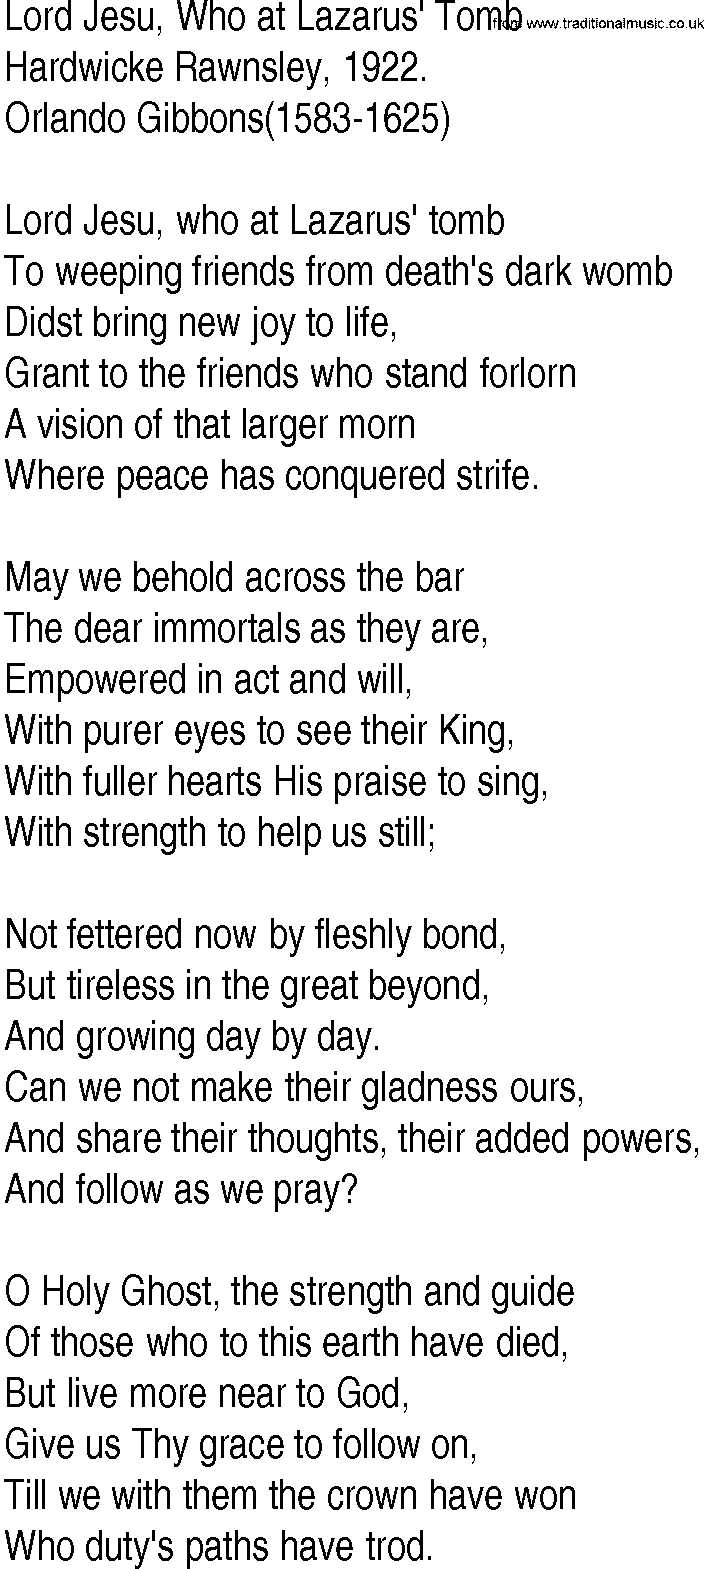 Hymn and Gospel Song: Lord Jesu, Who at Lazarus' Tomb by Hardwicke Rawnsley lyrics